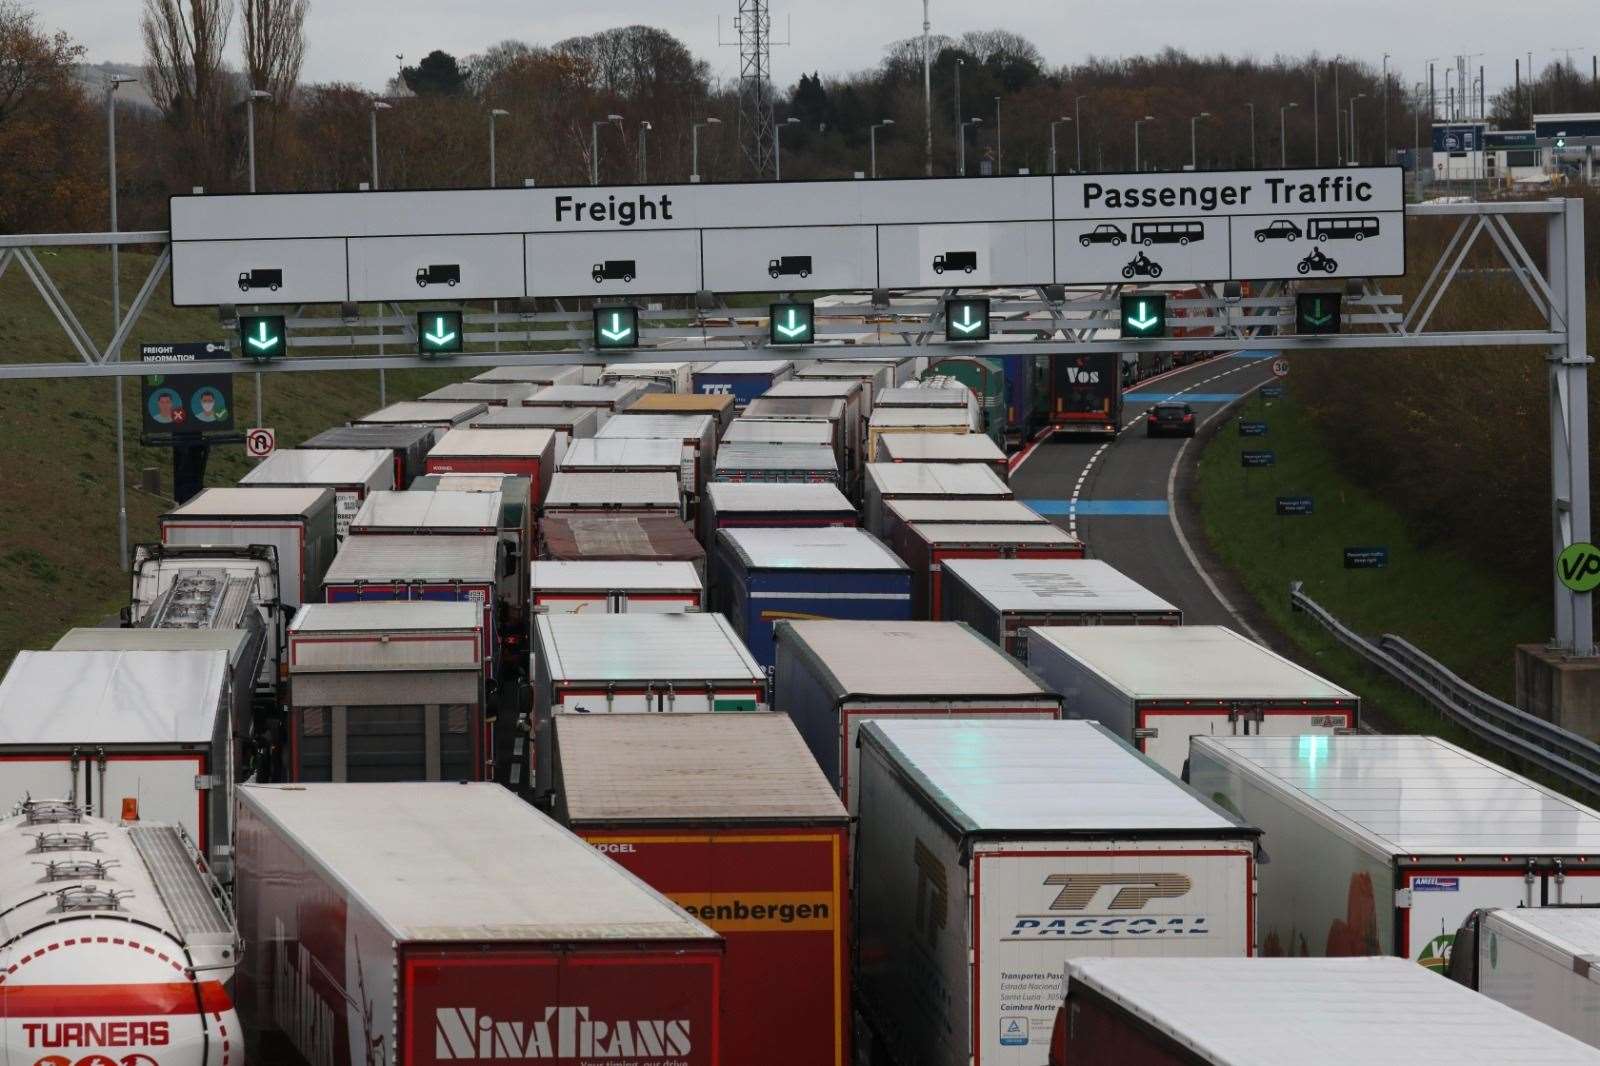 Huge queues of lorries formed at the Eurotunnel last week. Picture: UKNIP